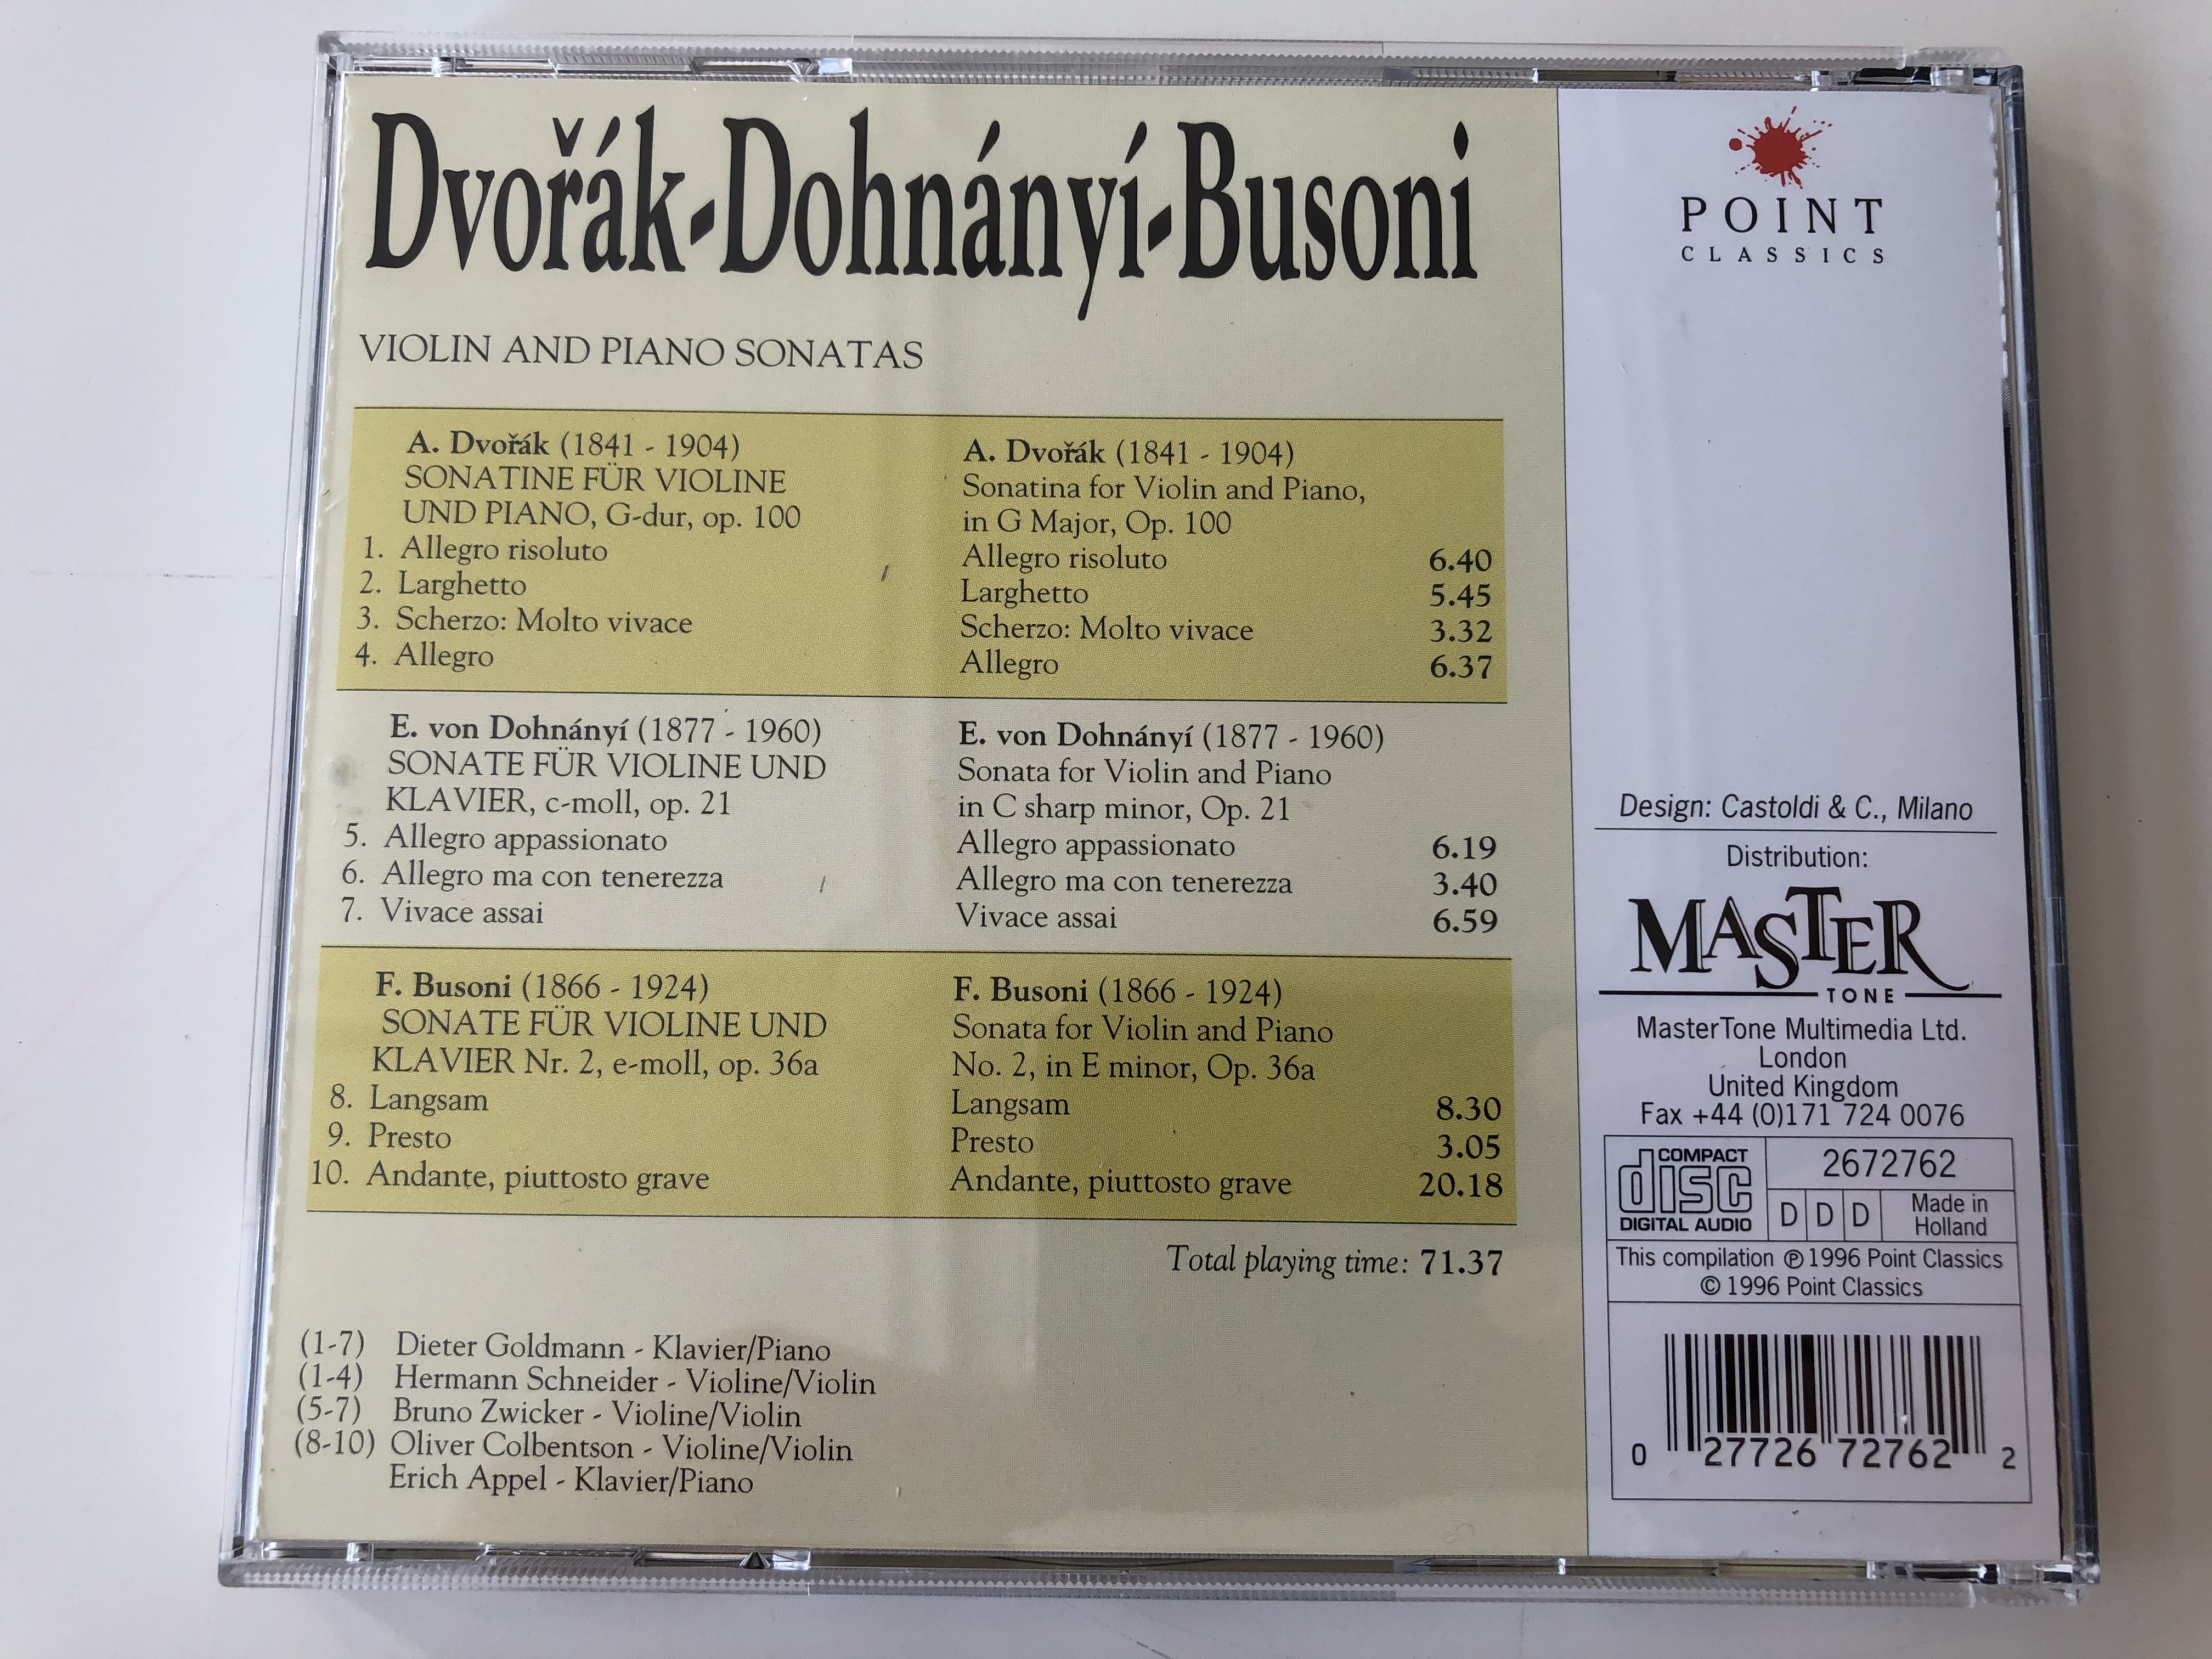 dvorak-dohnanyi-busoni-violin-and-piano-sonatas-dieter-goldmann-piano-hermann-schneider-violin-bruno-zwicker-violin-oliver-colbentson-violin-erich-appel-piano-point-classic-5-.jpg